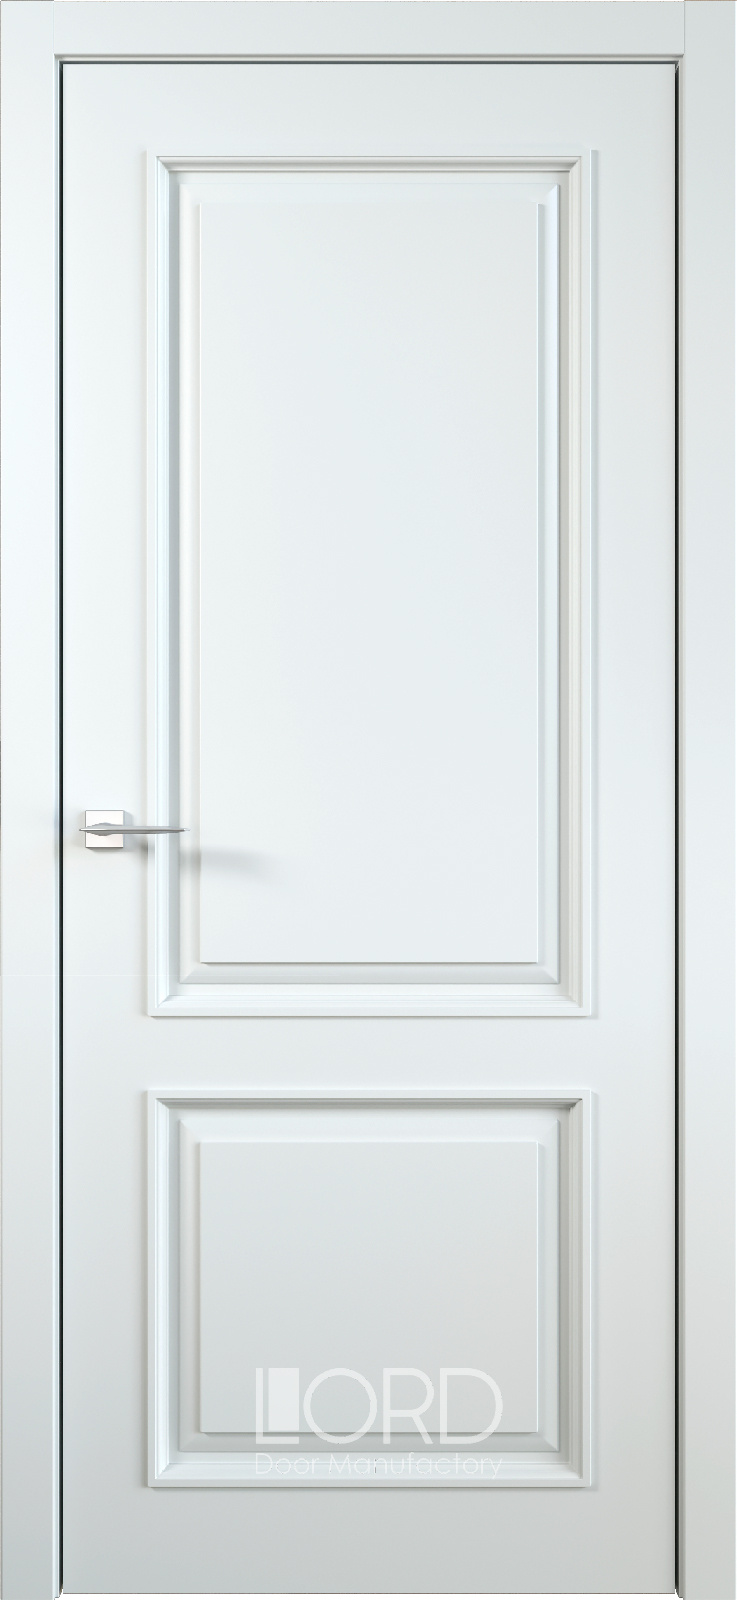 Лорд Межкомнатная дверь М1 ДГ, арт. 22891 - фото №1